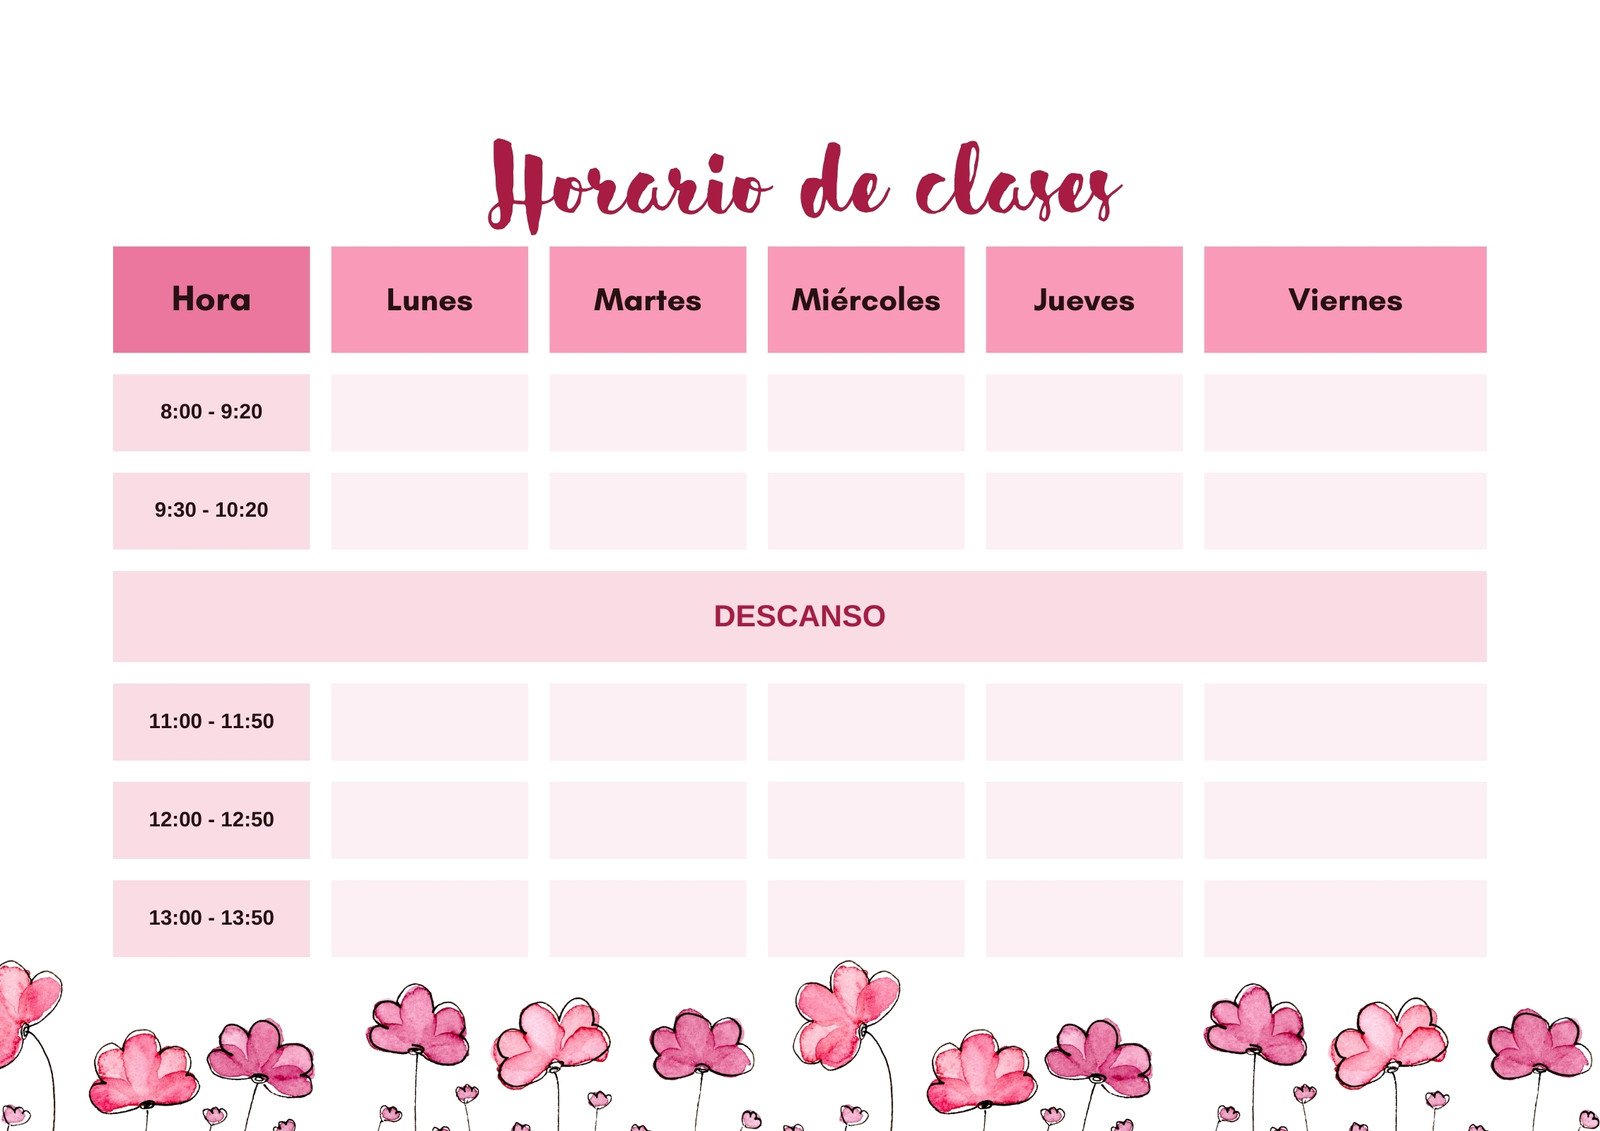 Horario de clases floral rosa